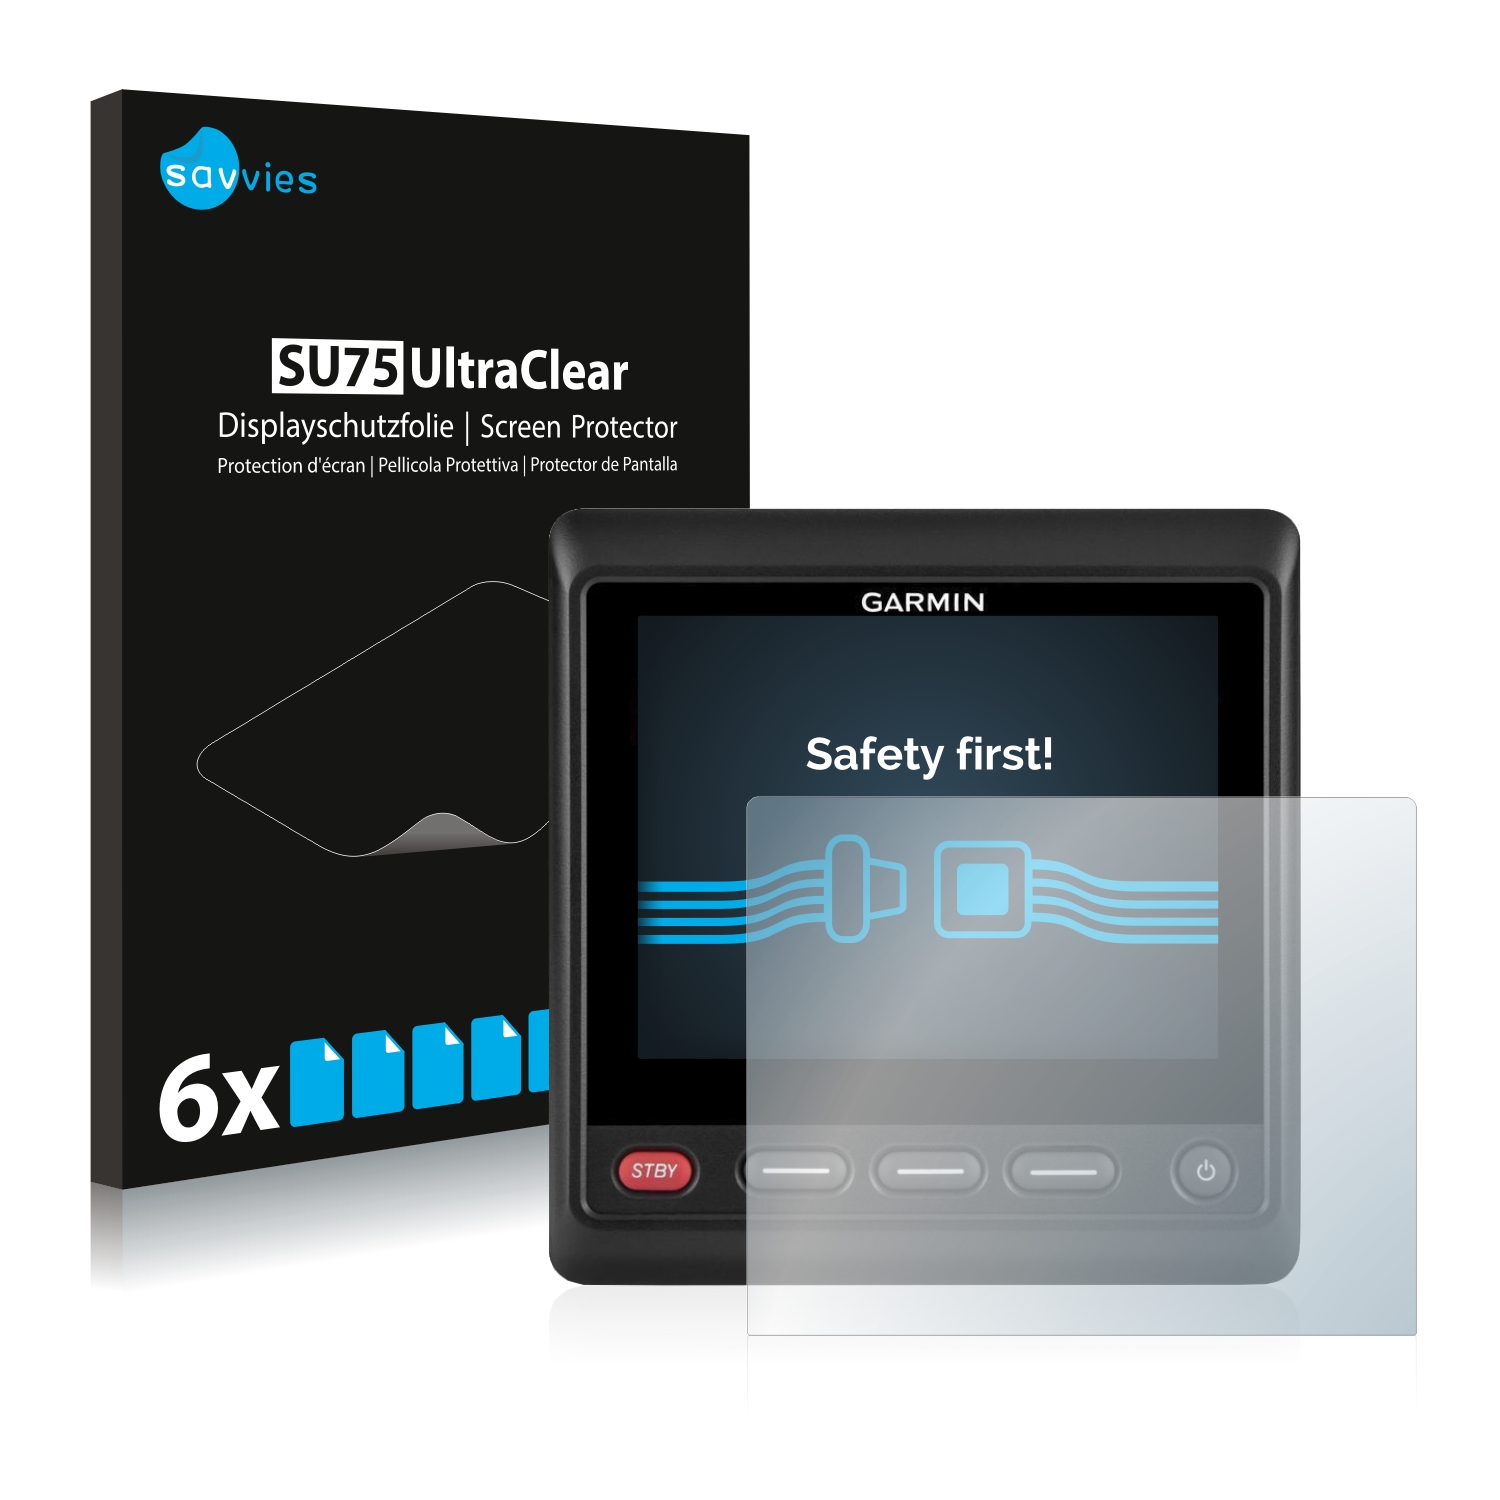 6x Savvies Screen Protector for Garmin nüvi 2545LMT CE Ultra Clear 